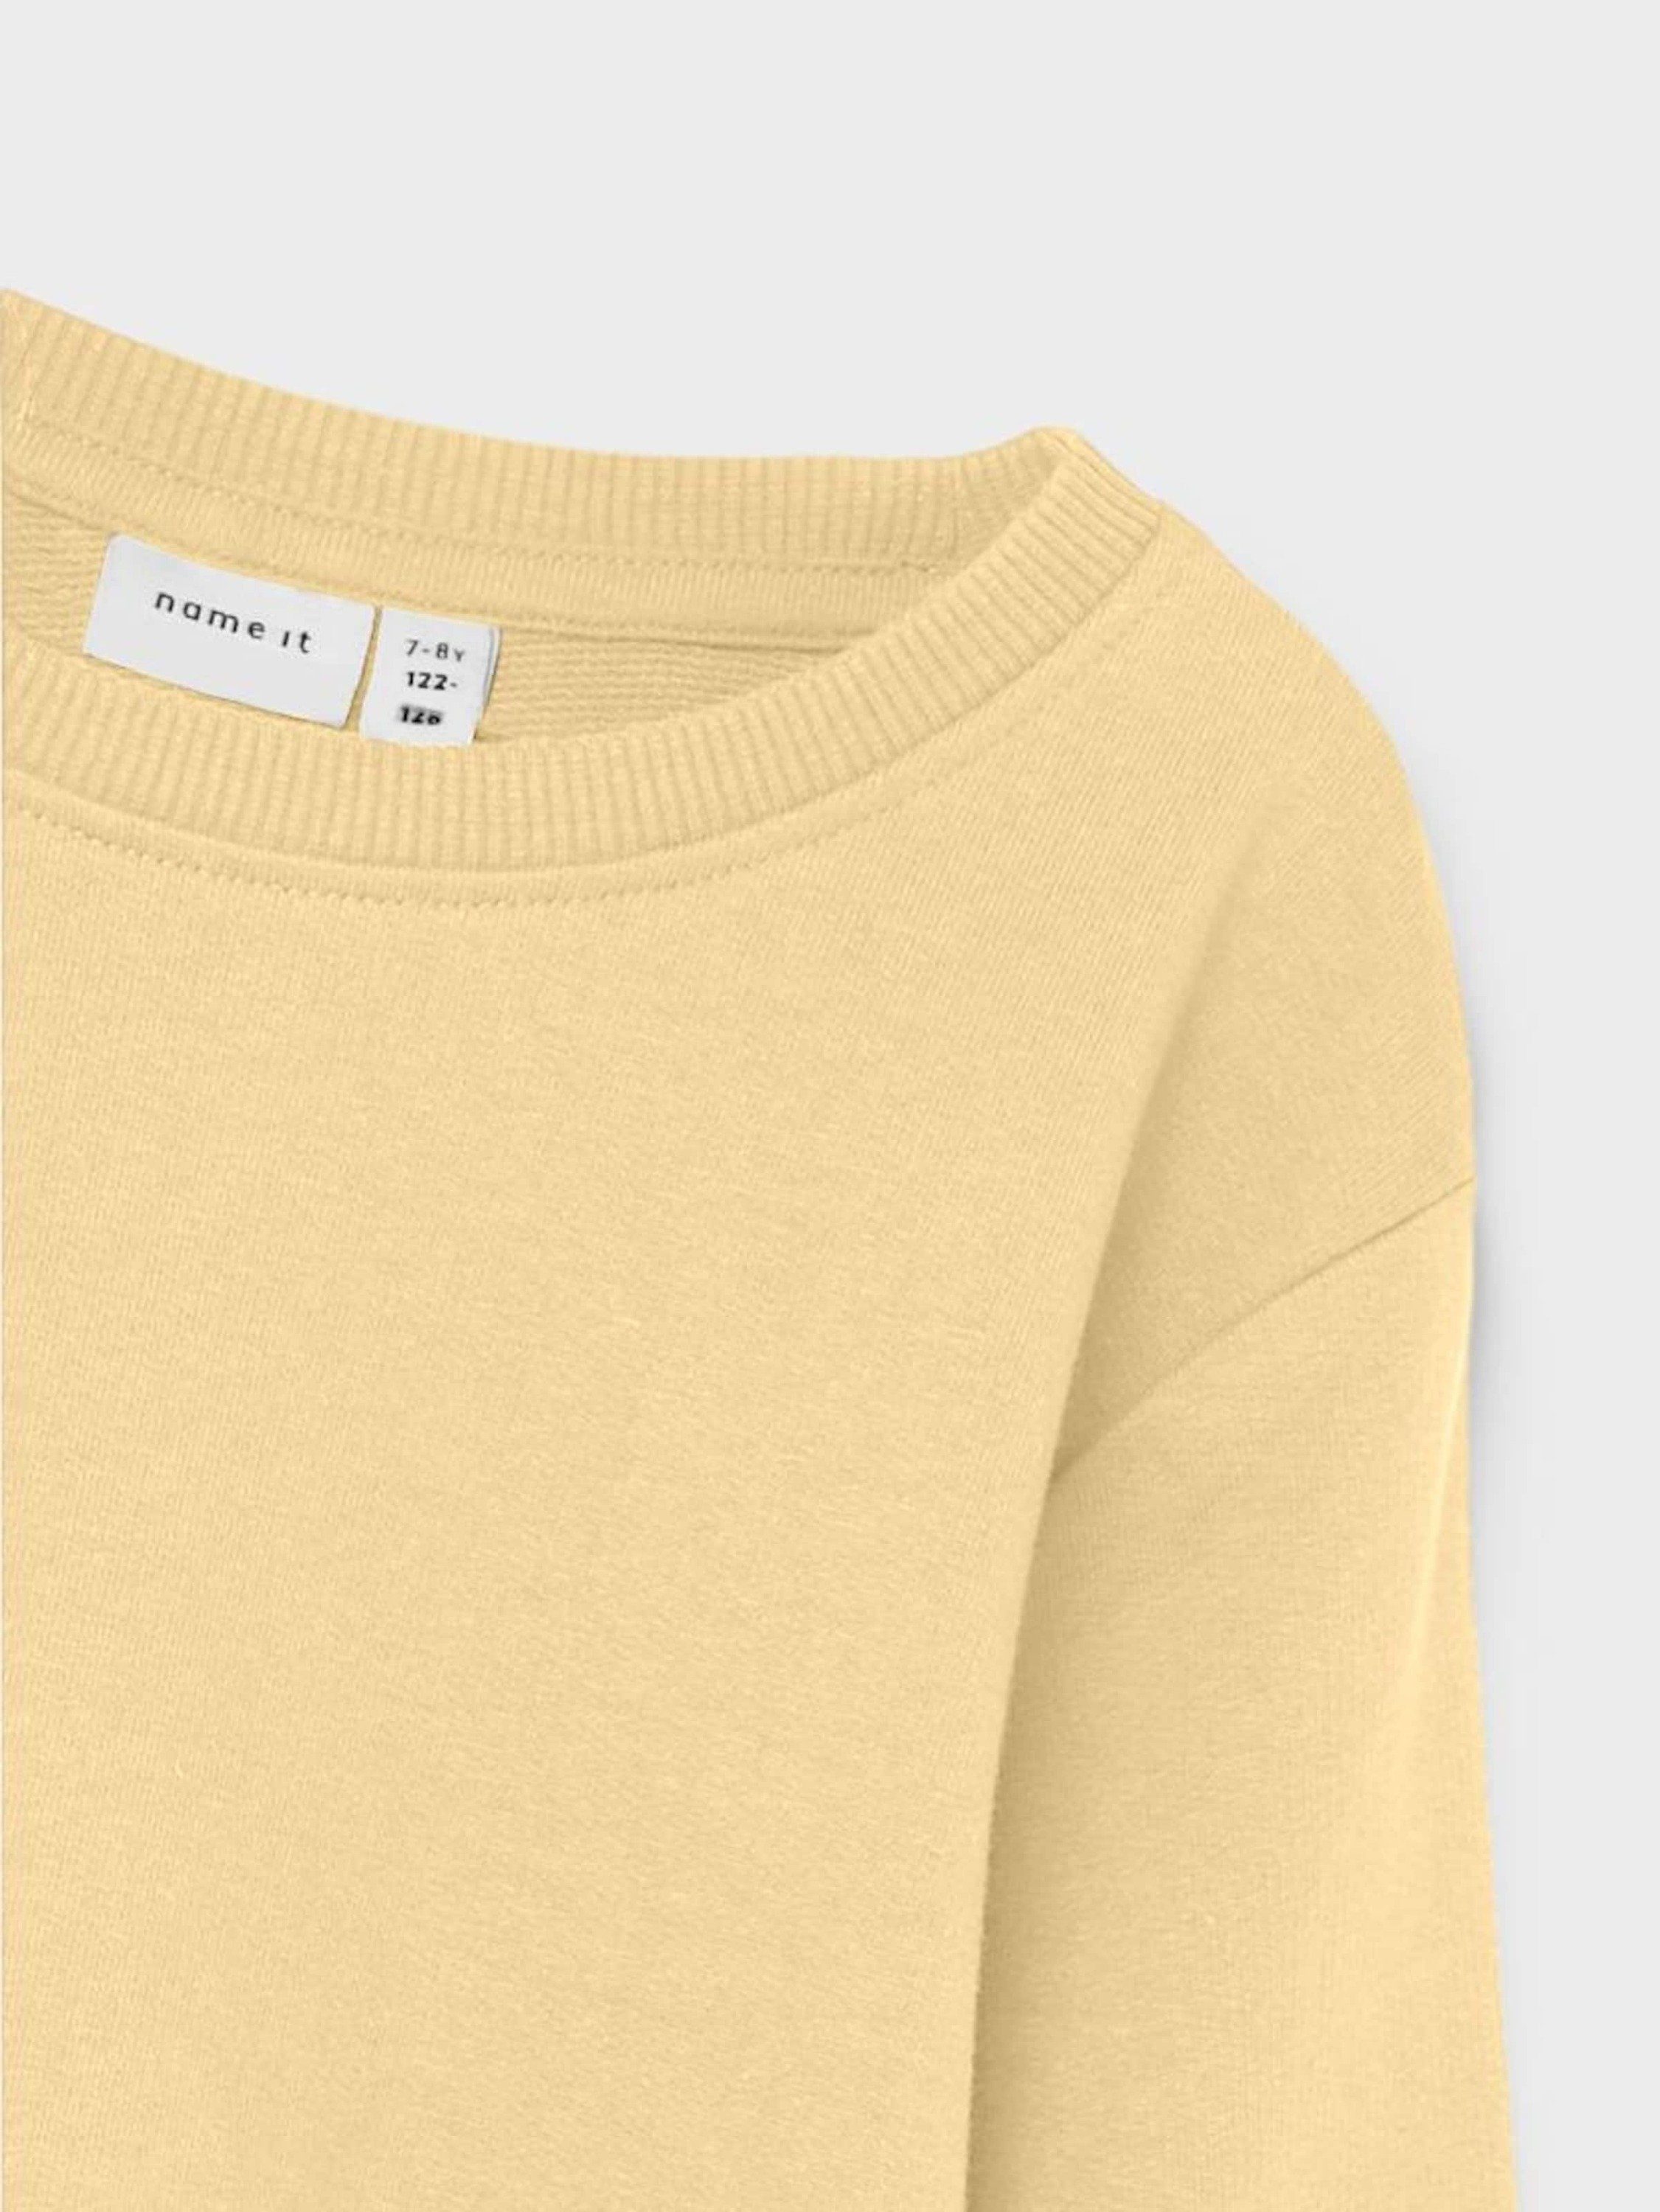 Name Plain/ohne Details It Sweatshirt (1-tlg)